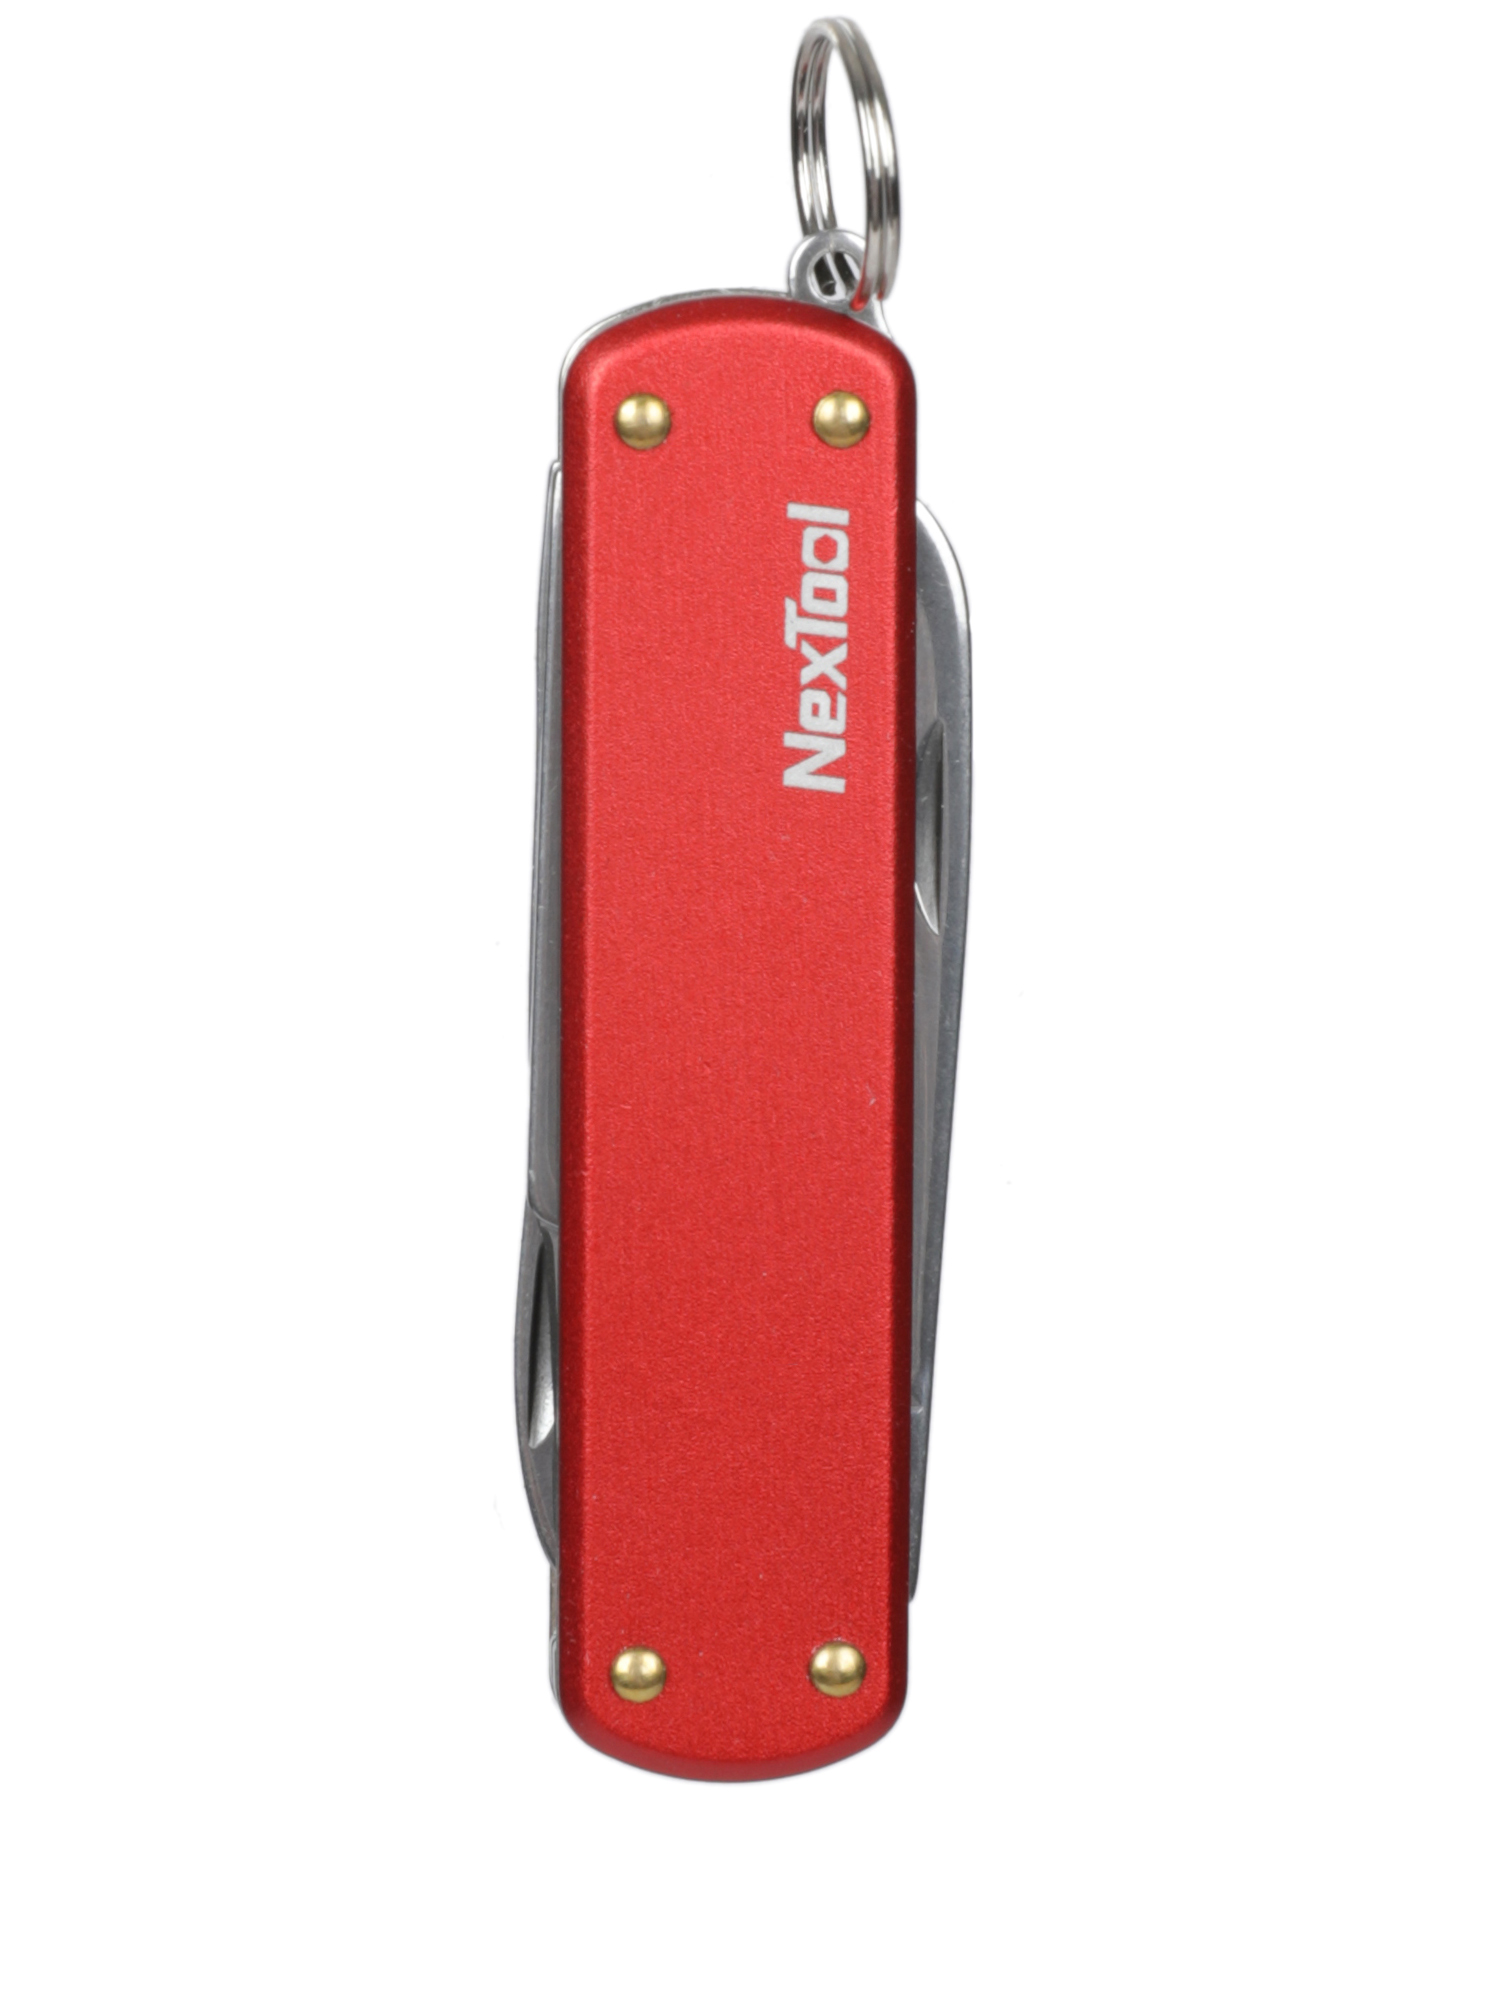 Мультиинструмент NexTool Mini Pocket Knife Red